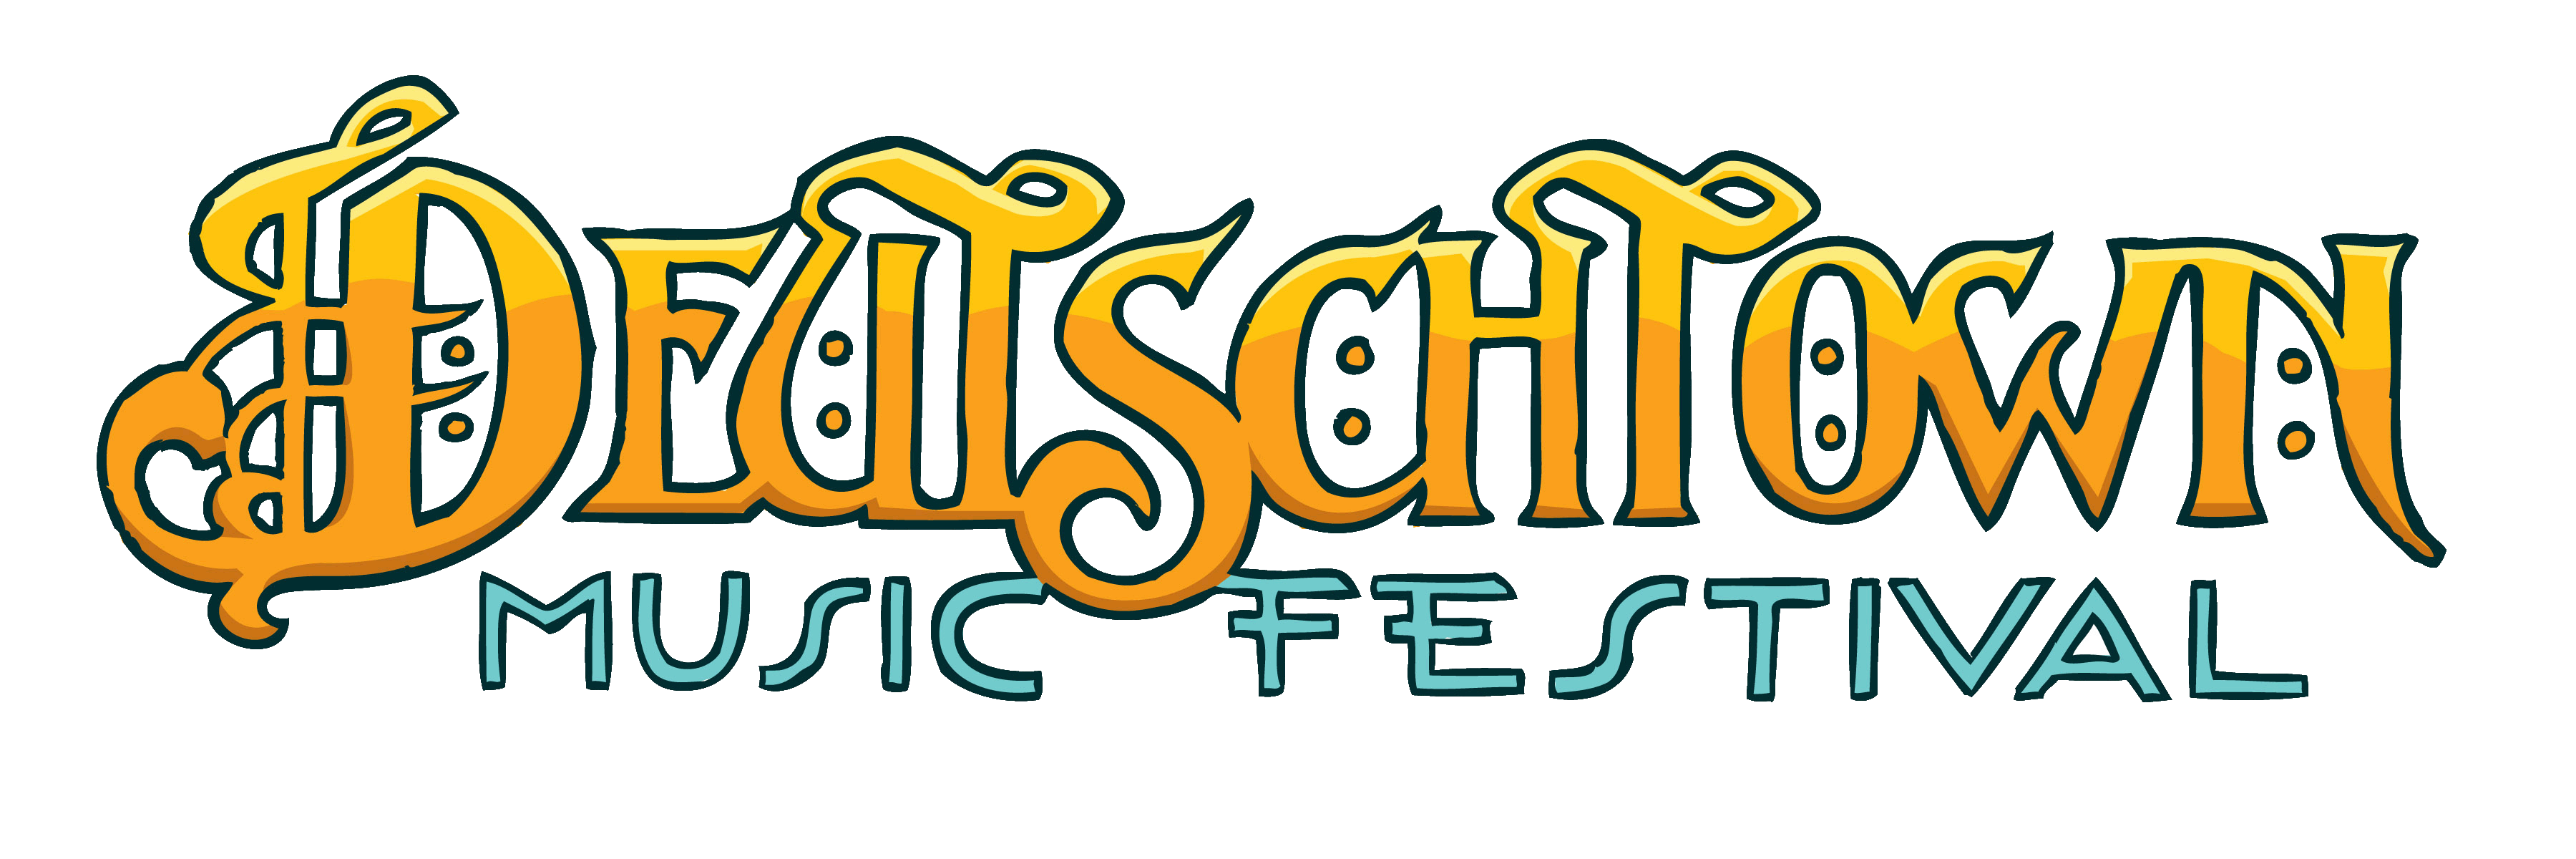 deutschtown music festival logo